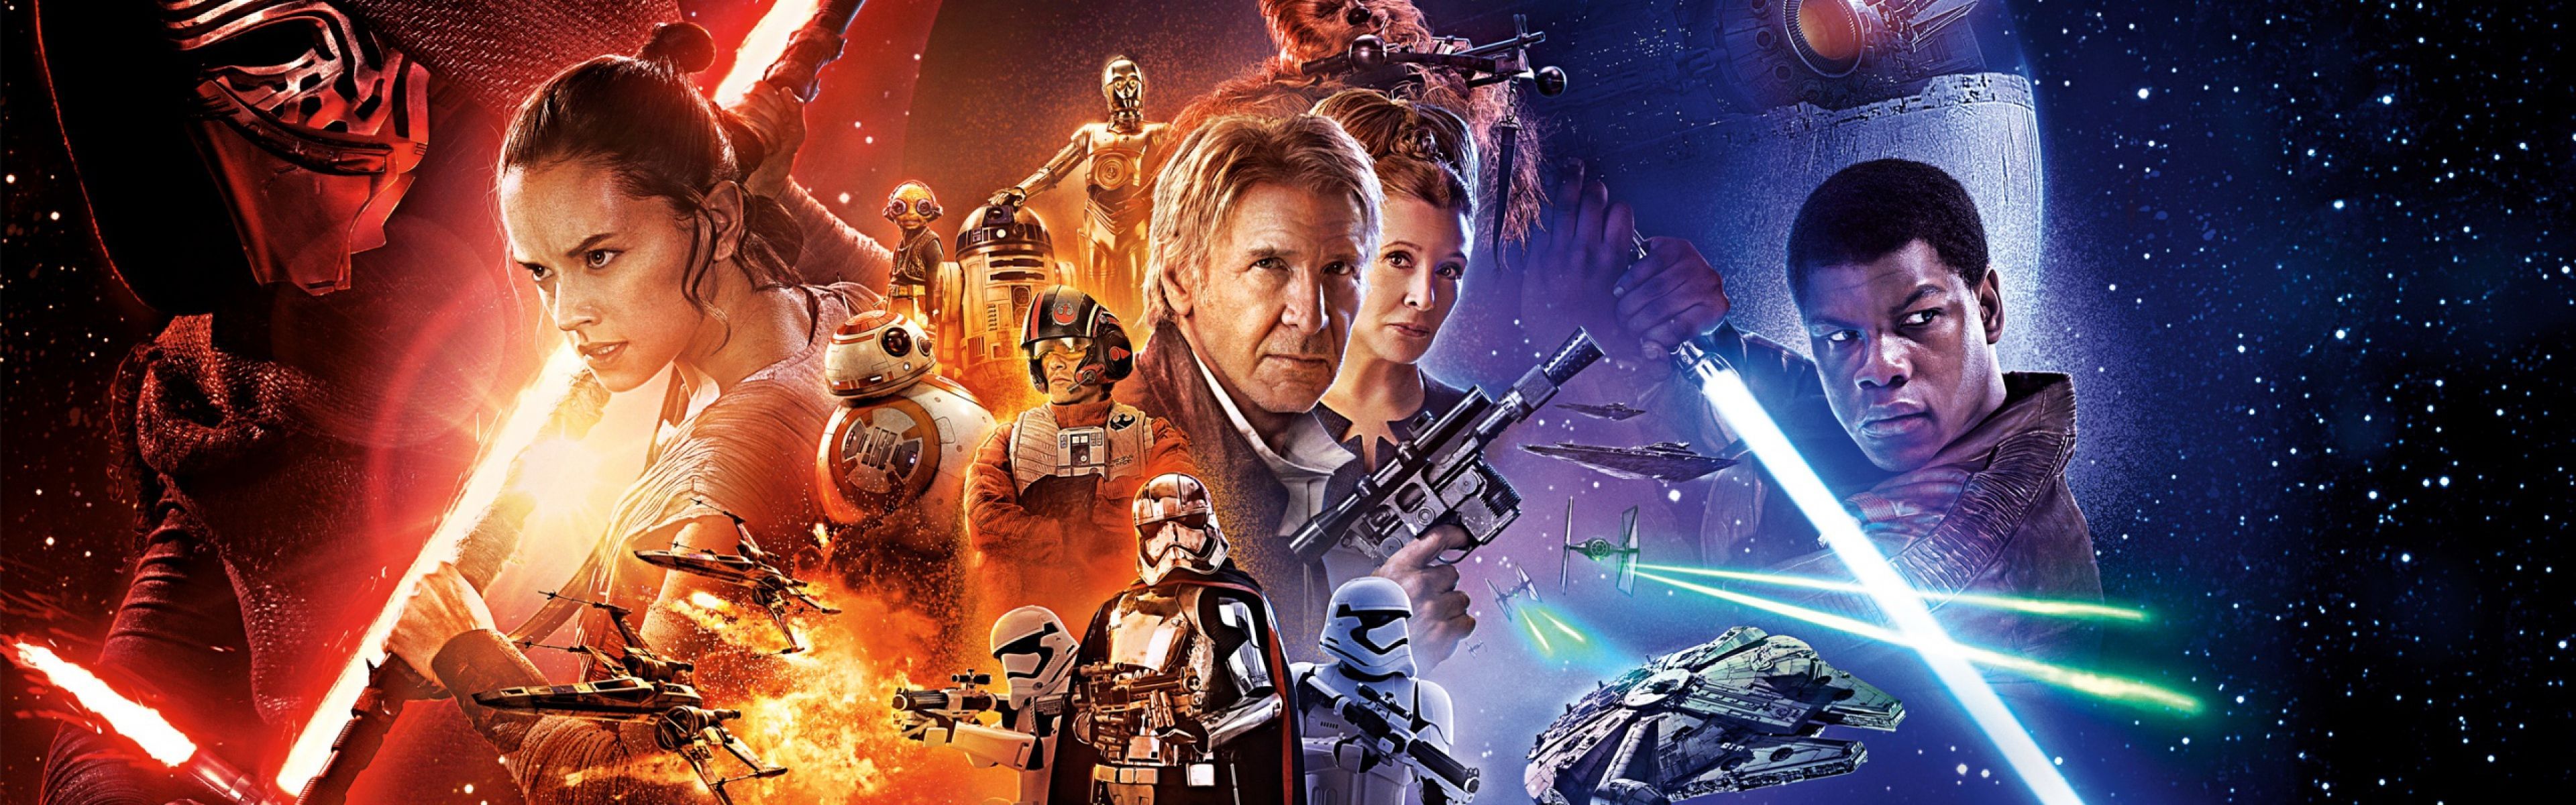 Dual Wide Star wars Wallpaper HD, Desktop Background 3840x1200. Star wars poster, Force awakens poster, Star wars episodes